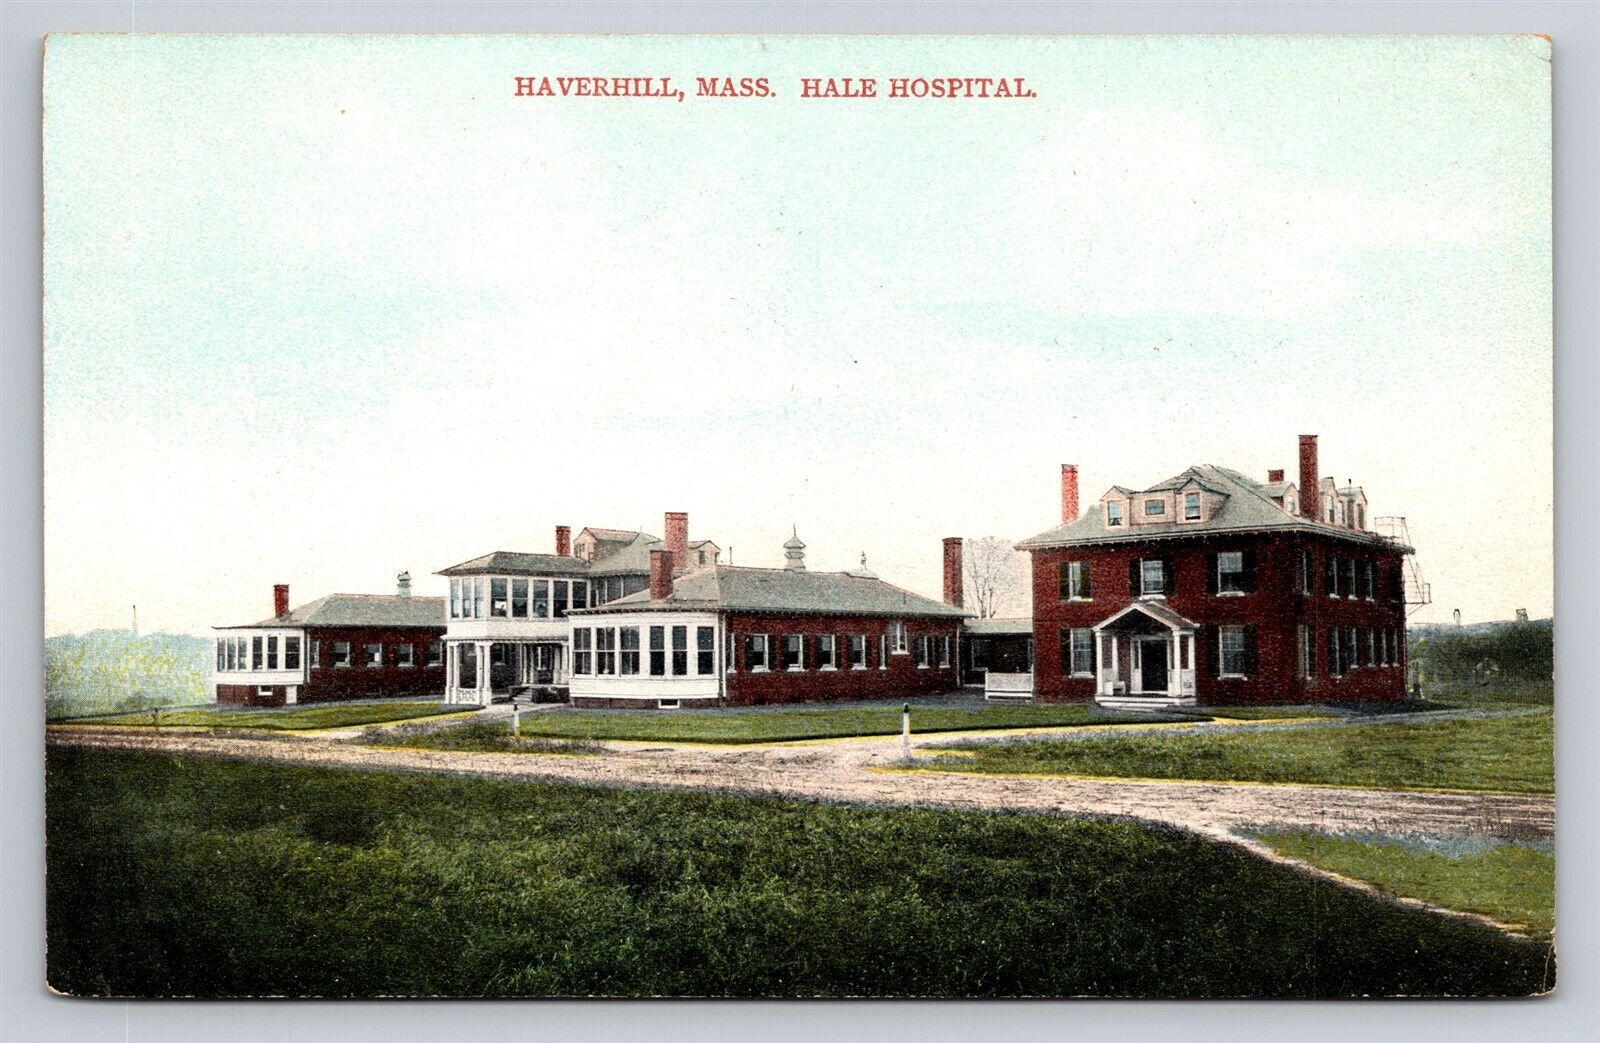 Hale Hospital Haverhill MA Massachusetts Old Vintage Postcard View 1910s